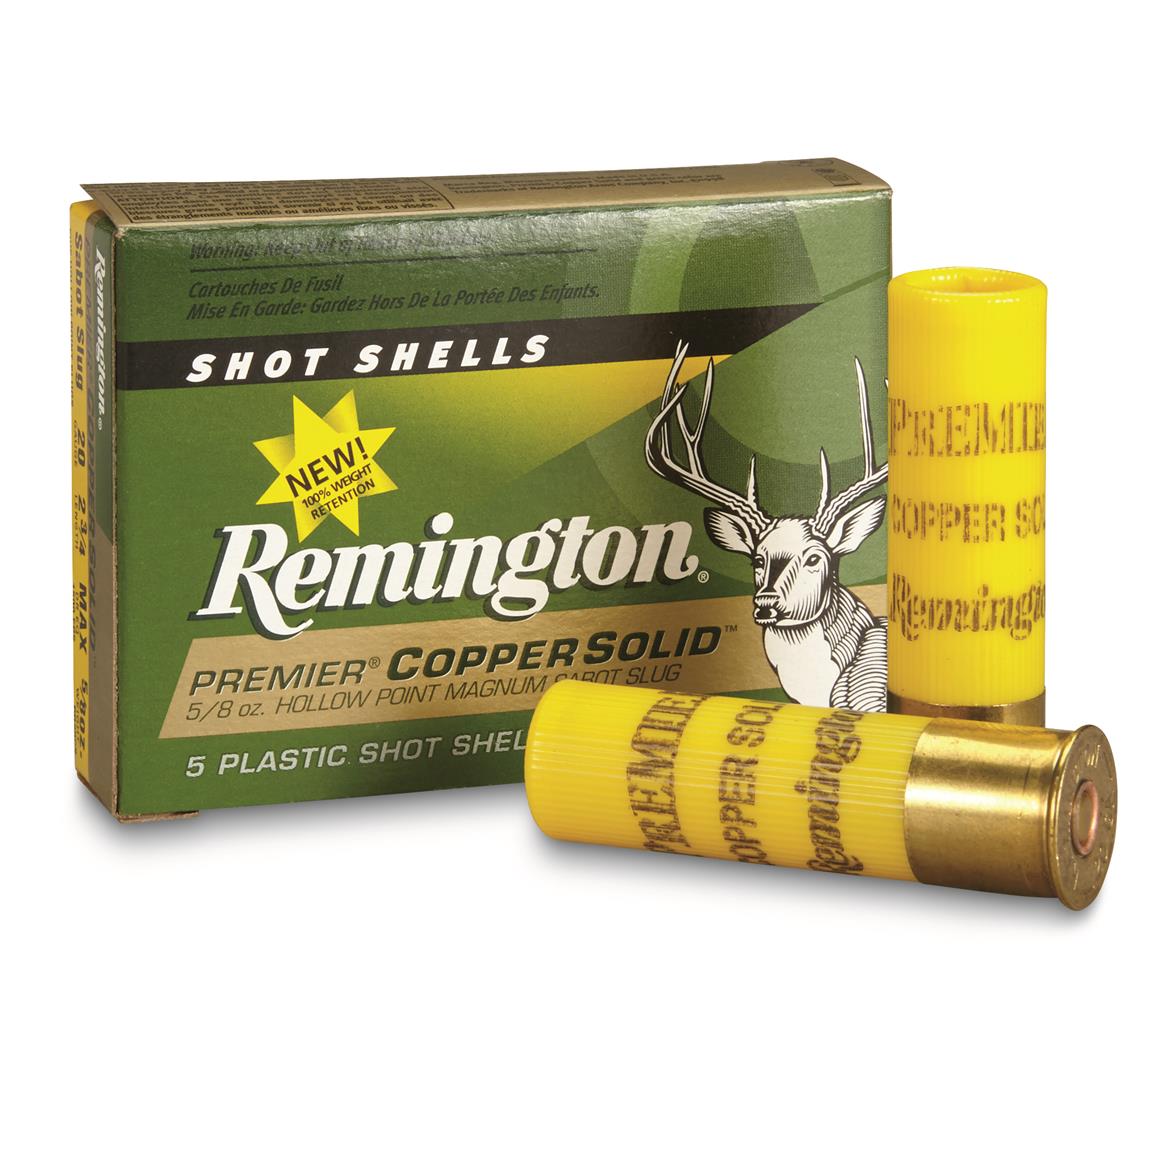 Remington Copper Solid Rebate